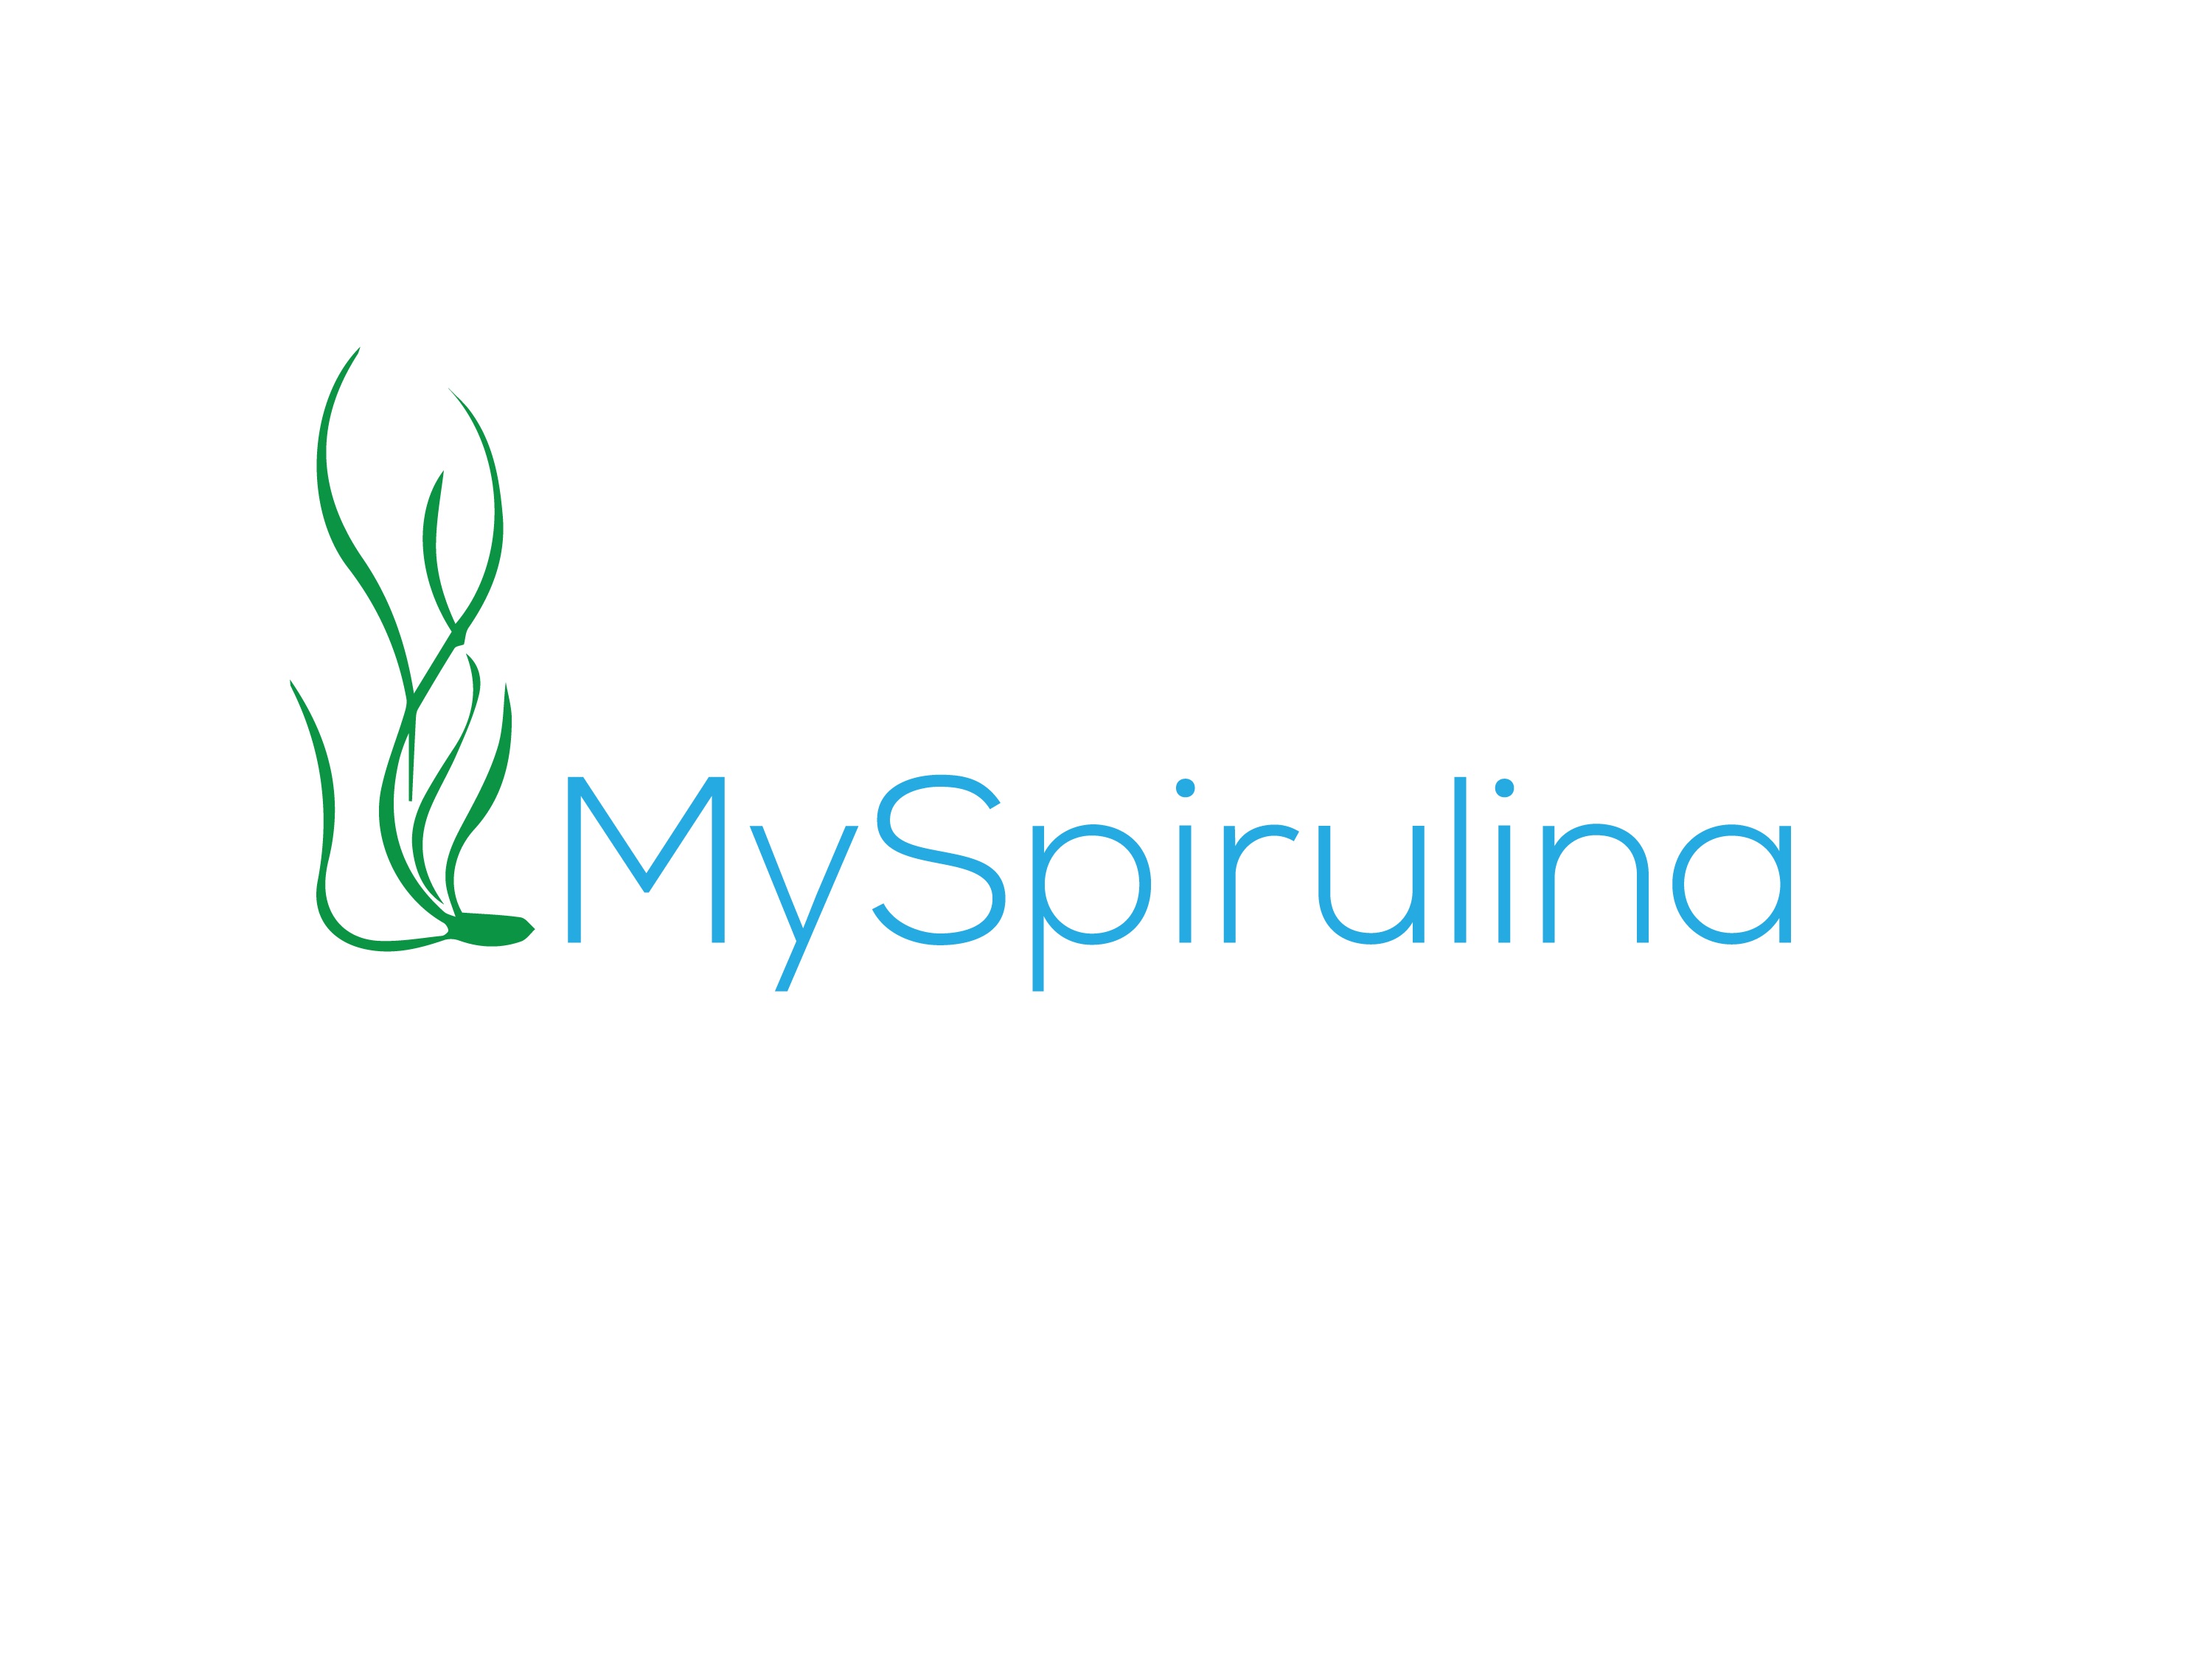 MYSPIRULINA is the Bulgarian winner of E-Health category